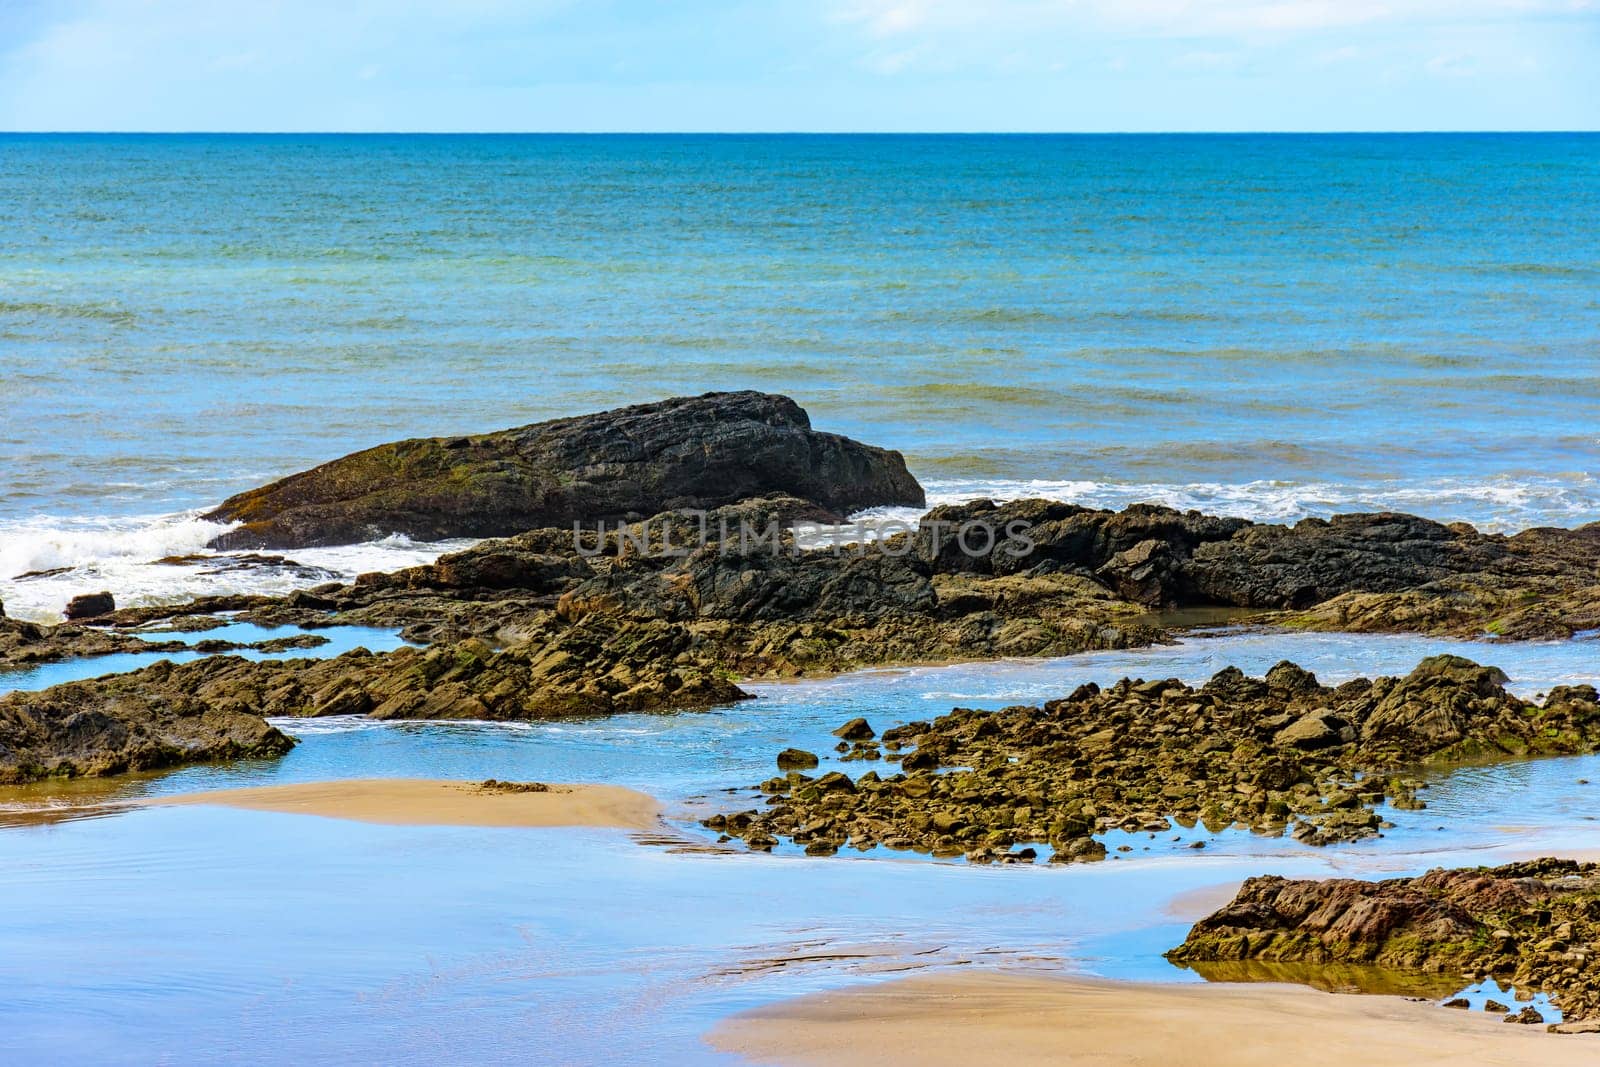 Sand between the rocks and the sea at Prainha beach by Fred_Pinheiro